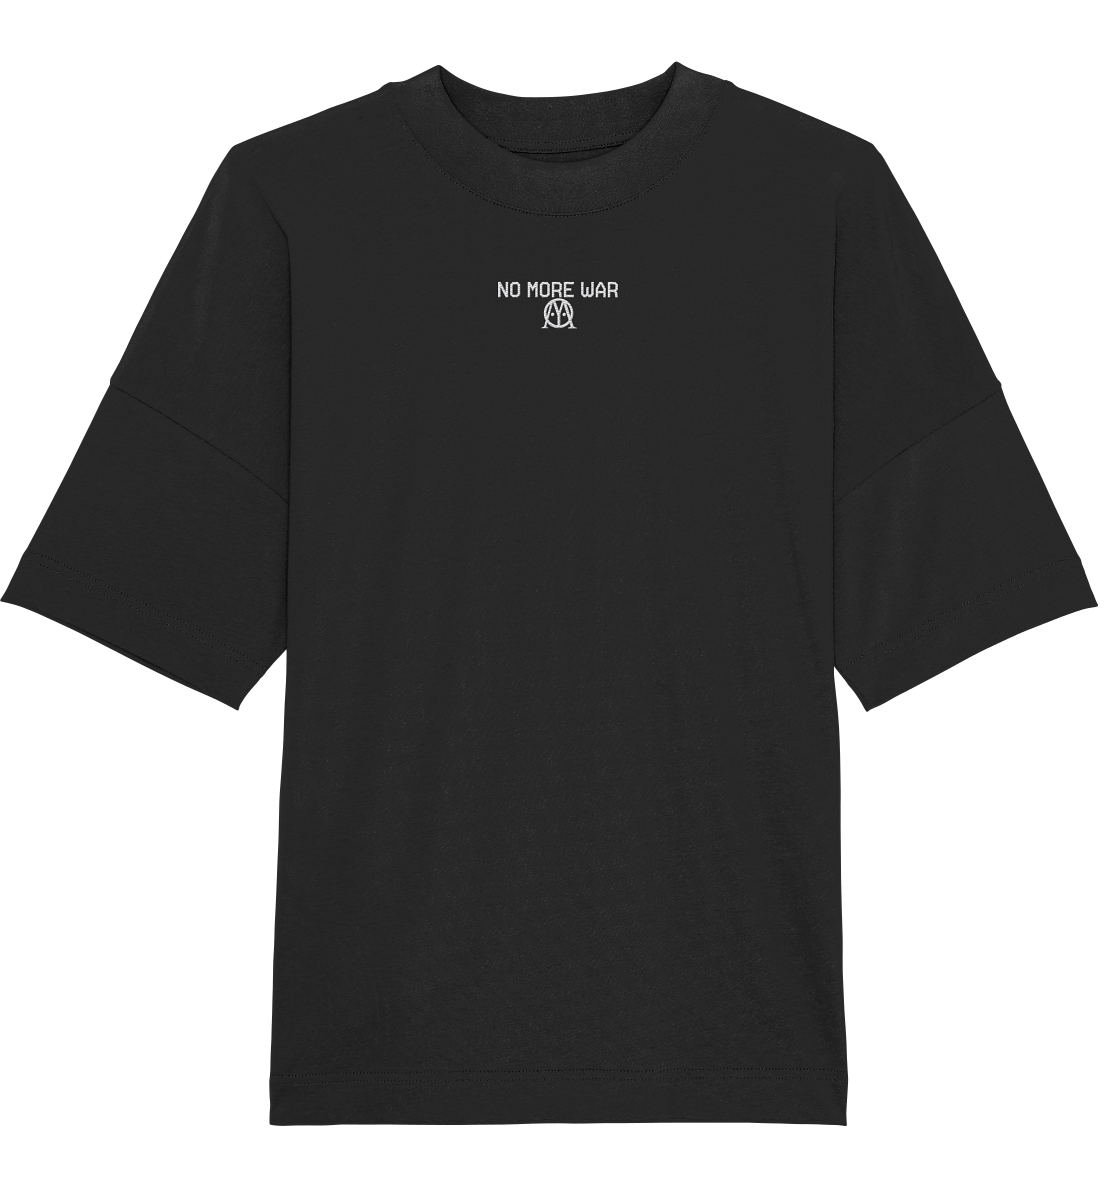 front-organic-oversize-shirt-stick-272727-1116x-1.png